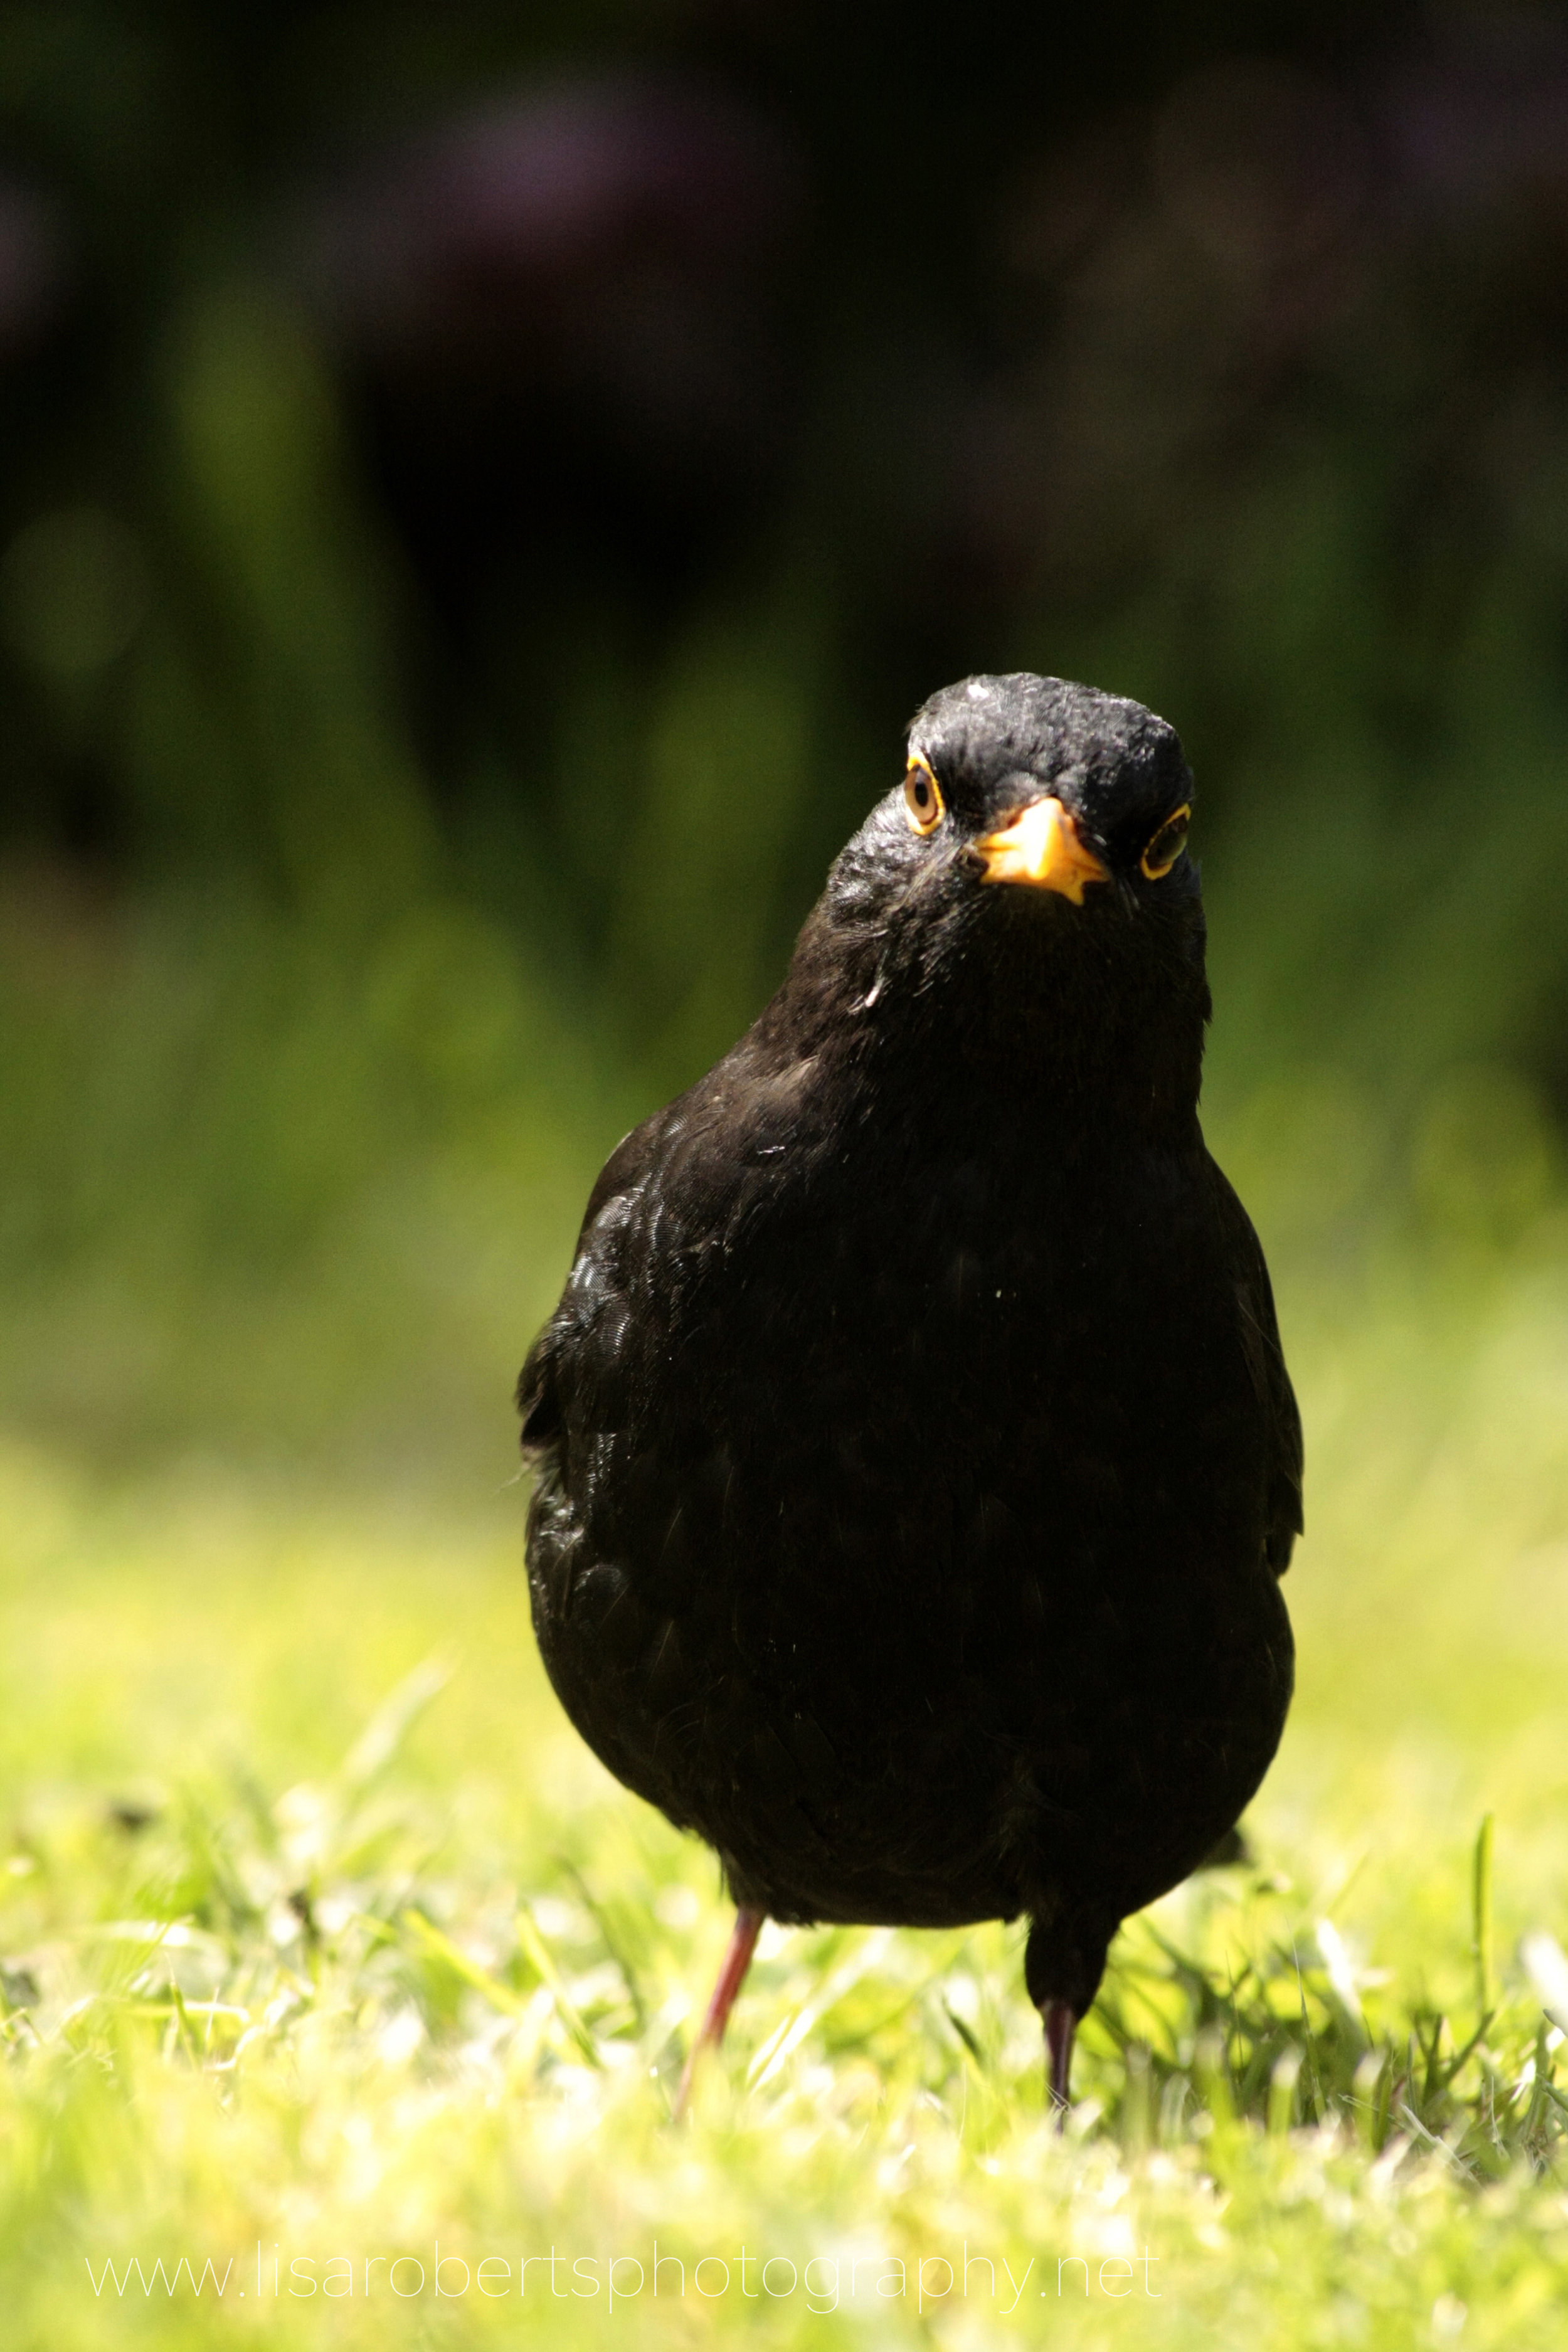  Male Blackbird face on 